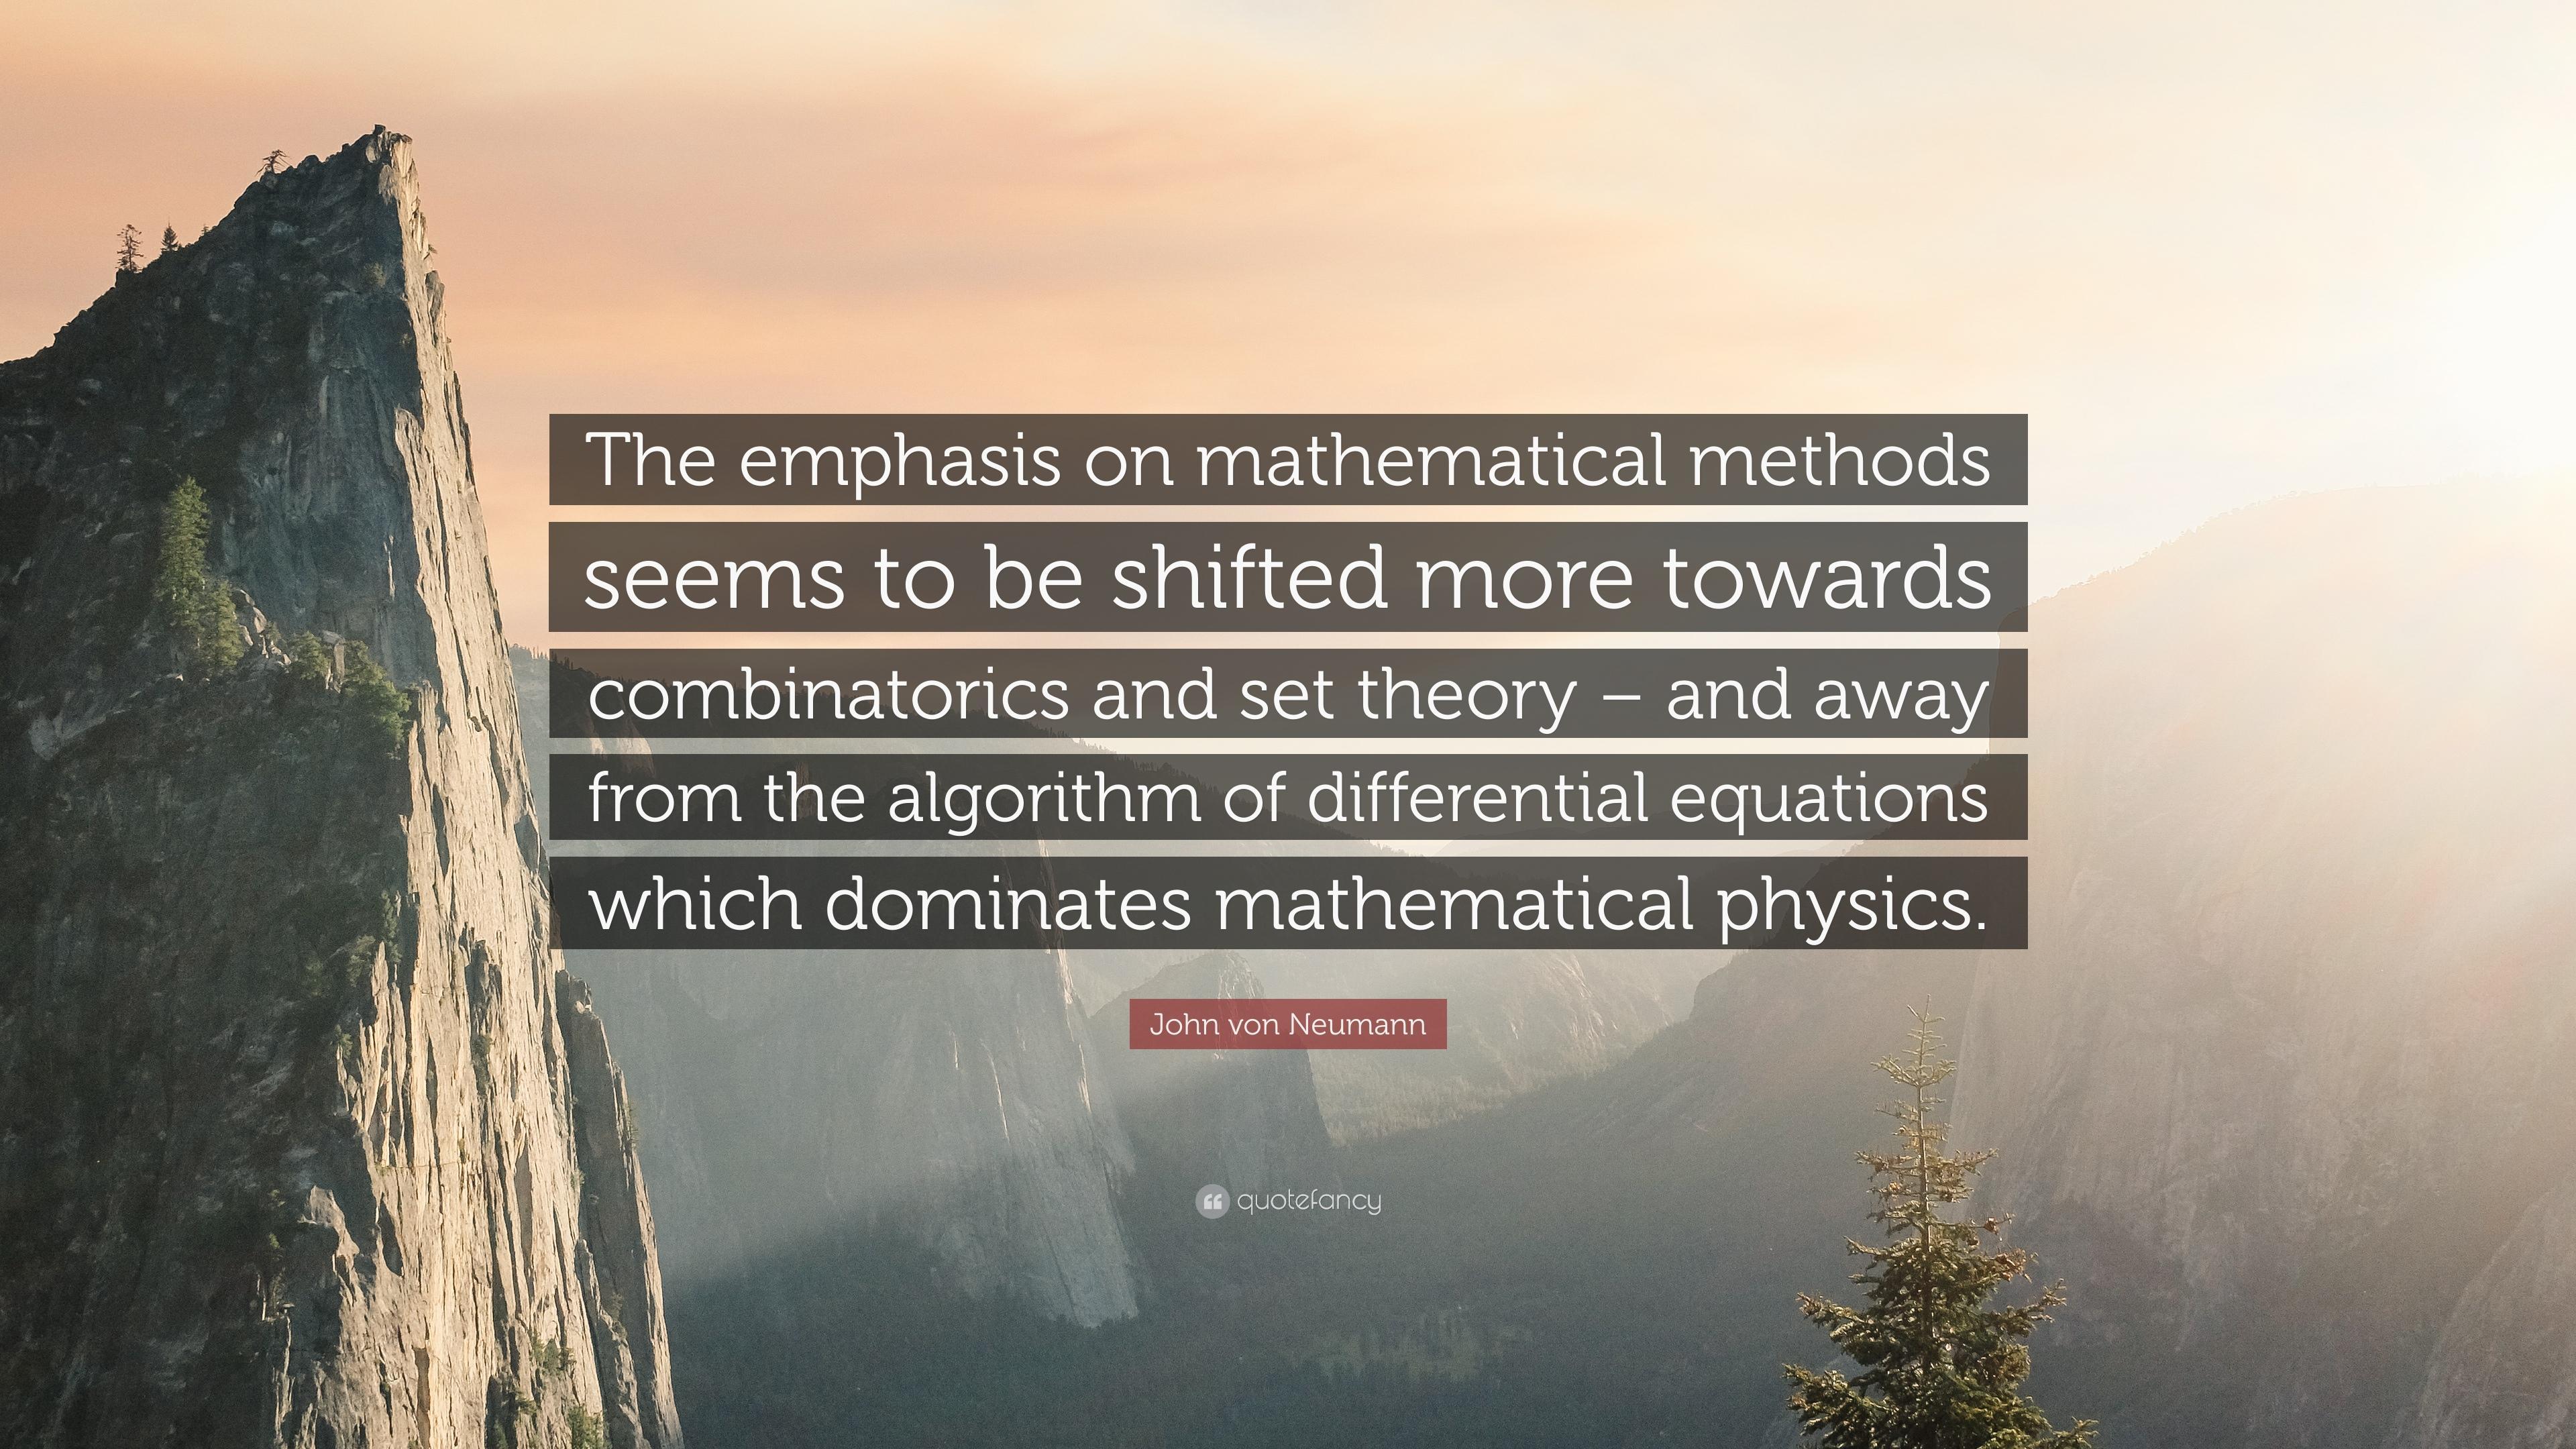 John von Neumann Quote: “The emphasis on mathematical methods seems